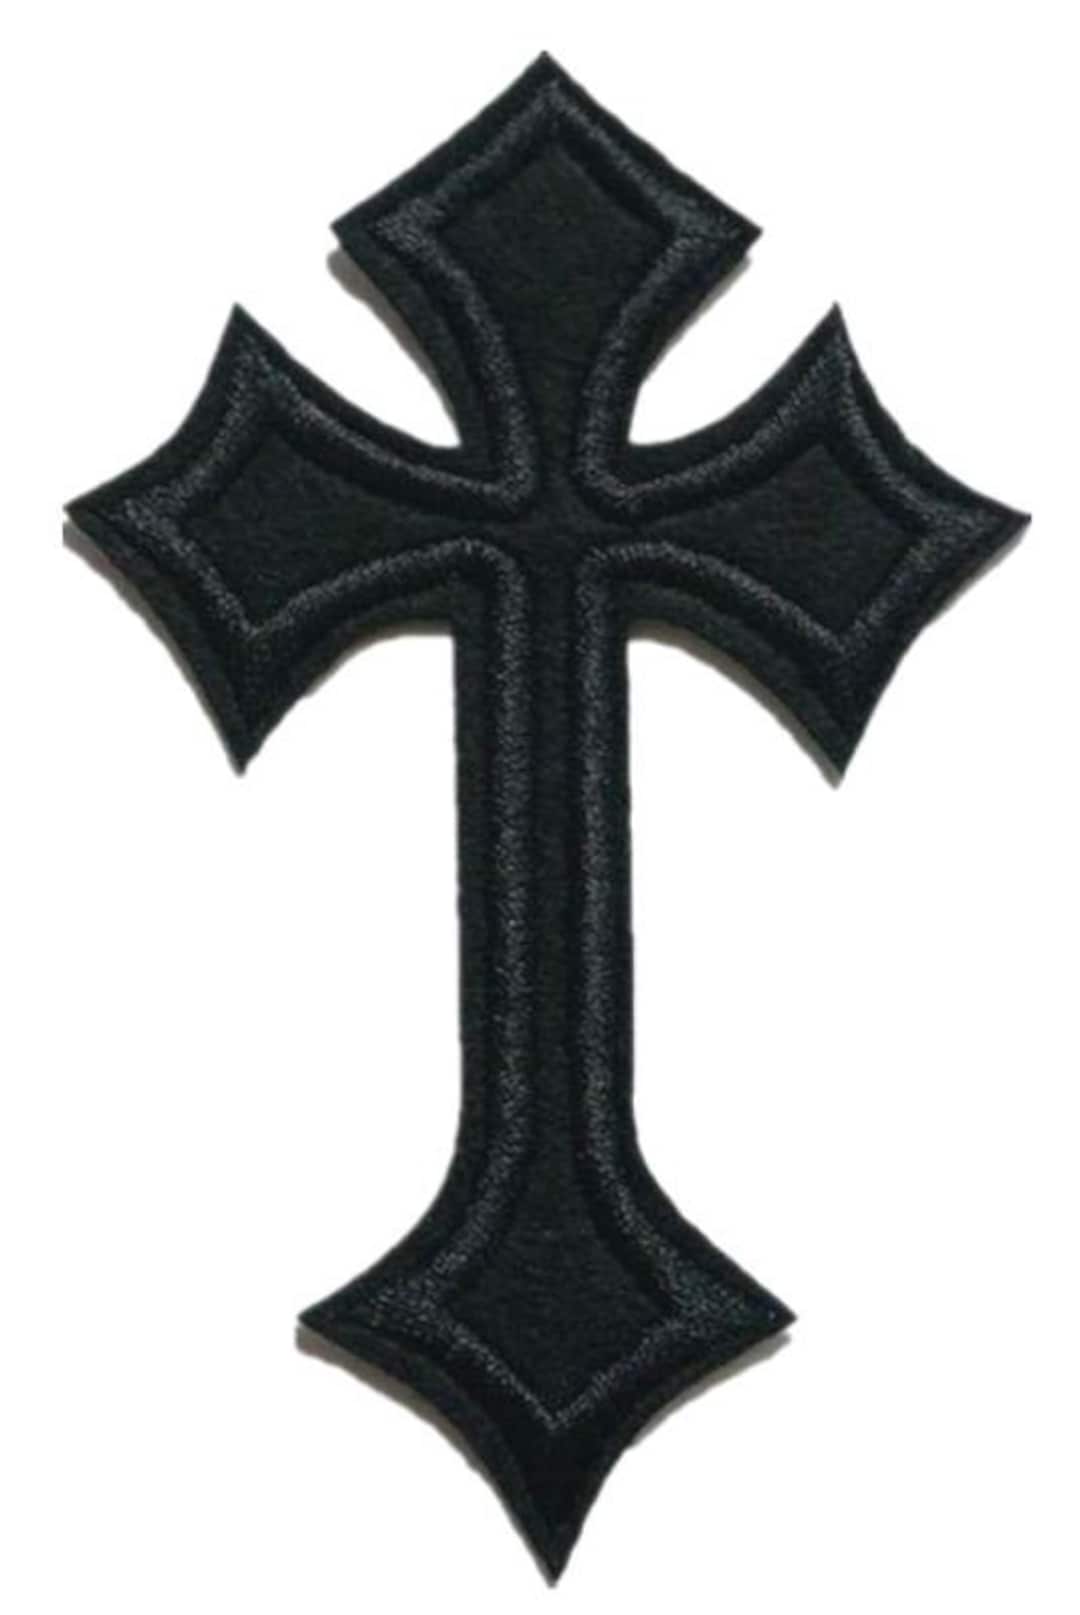 Blue & Black Decorative Cross Patch, Religious Cross Patches